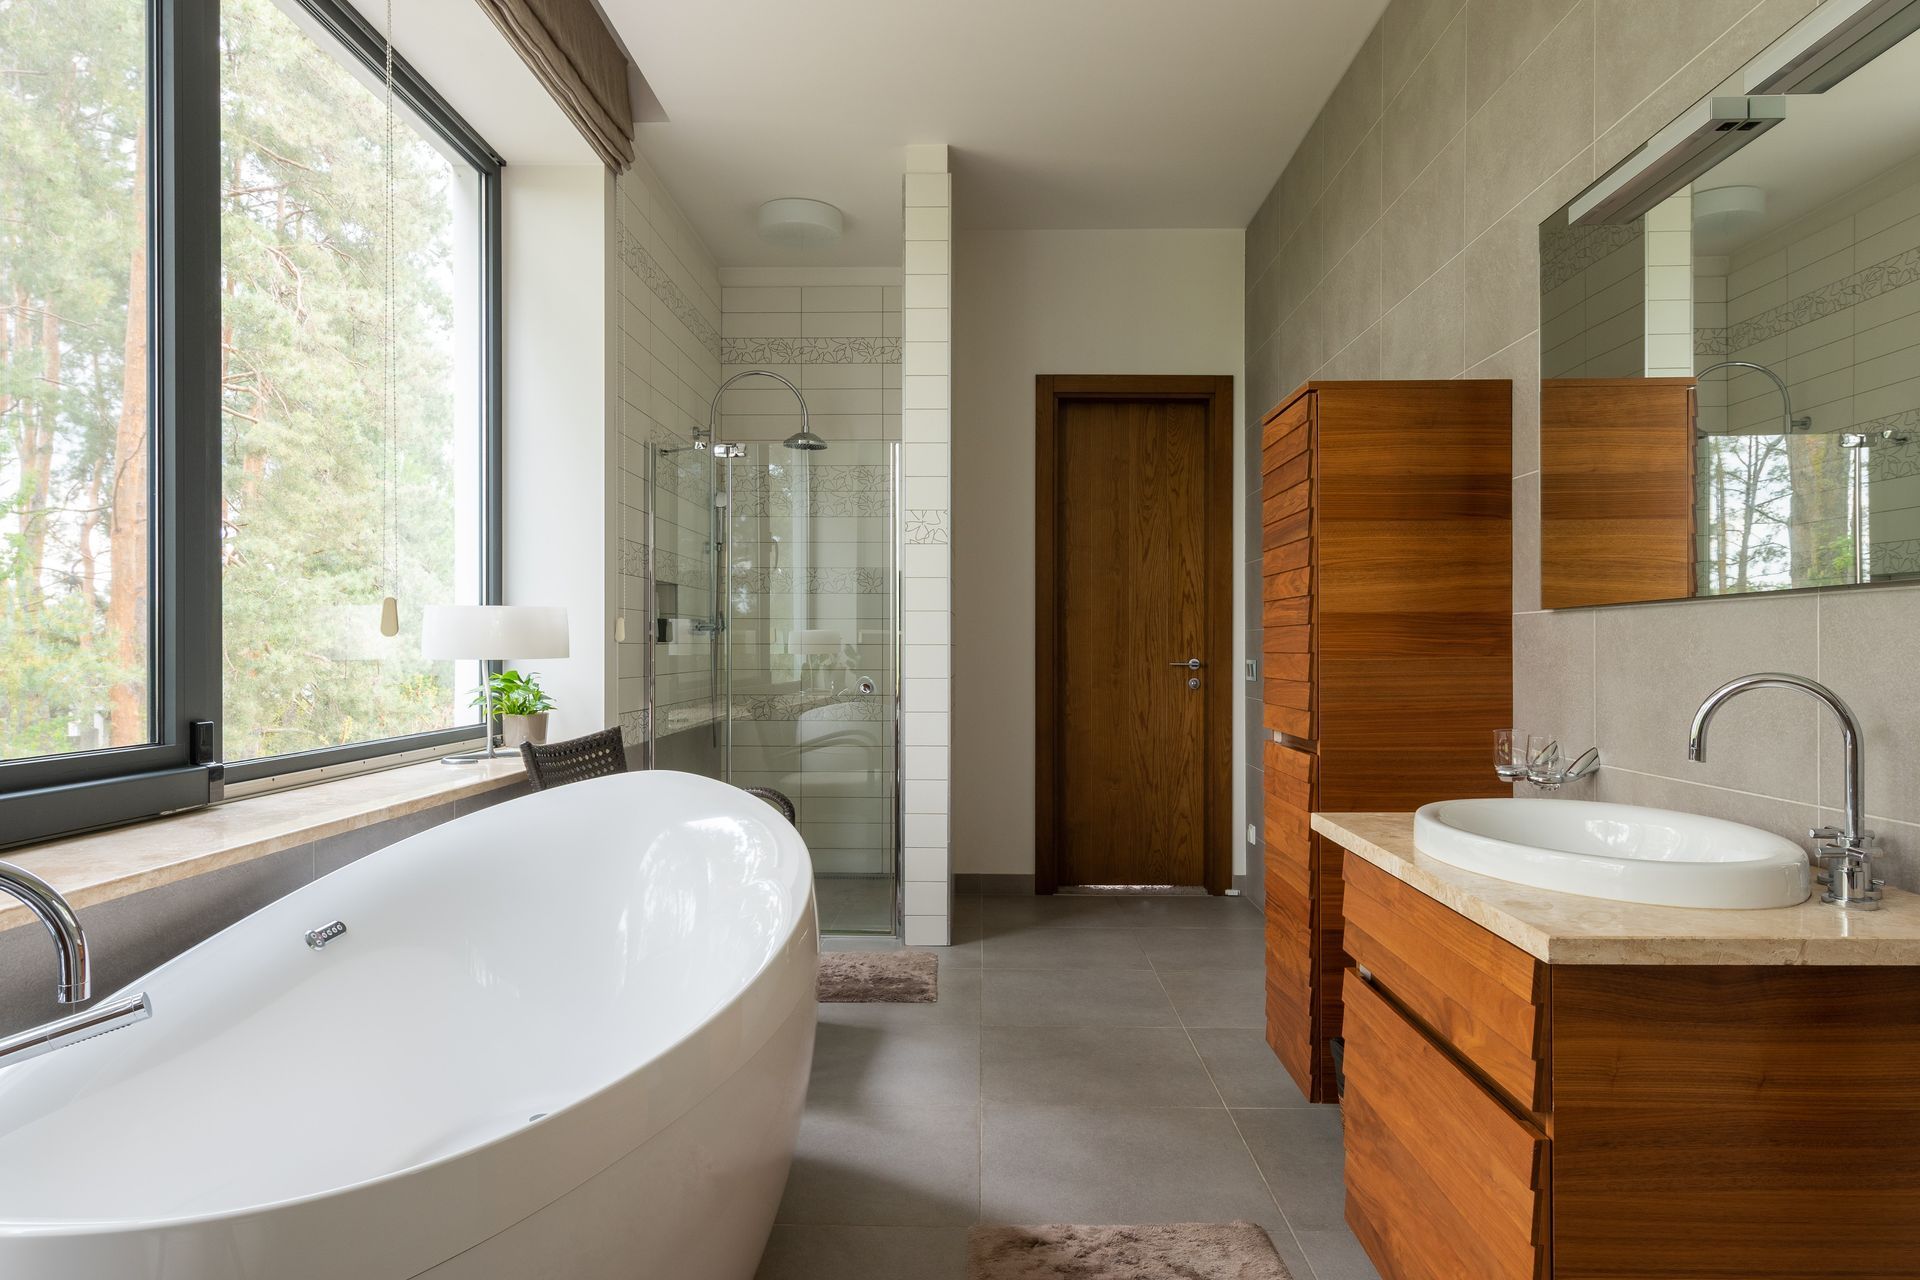 Freestanding bath and walk-in shower in stylish, modern Bristol bathroom.